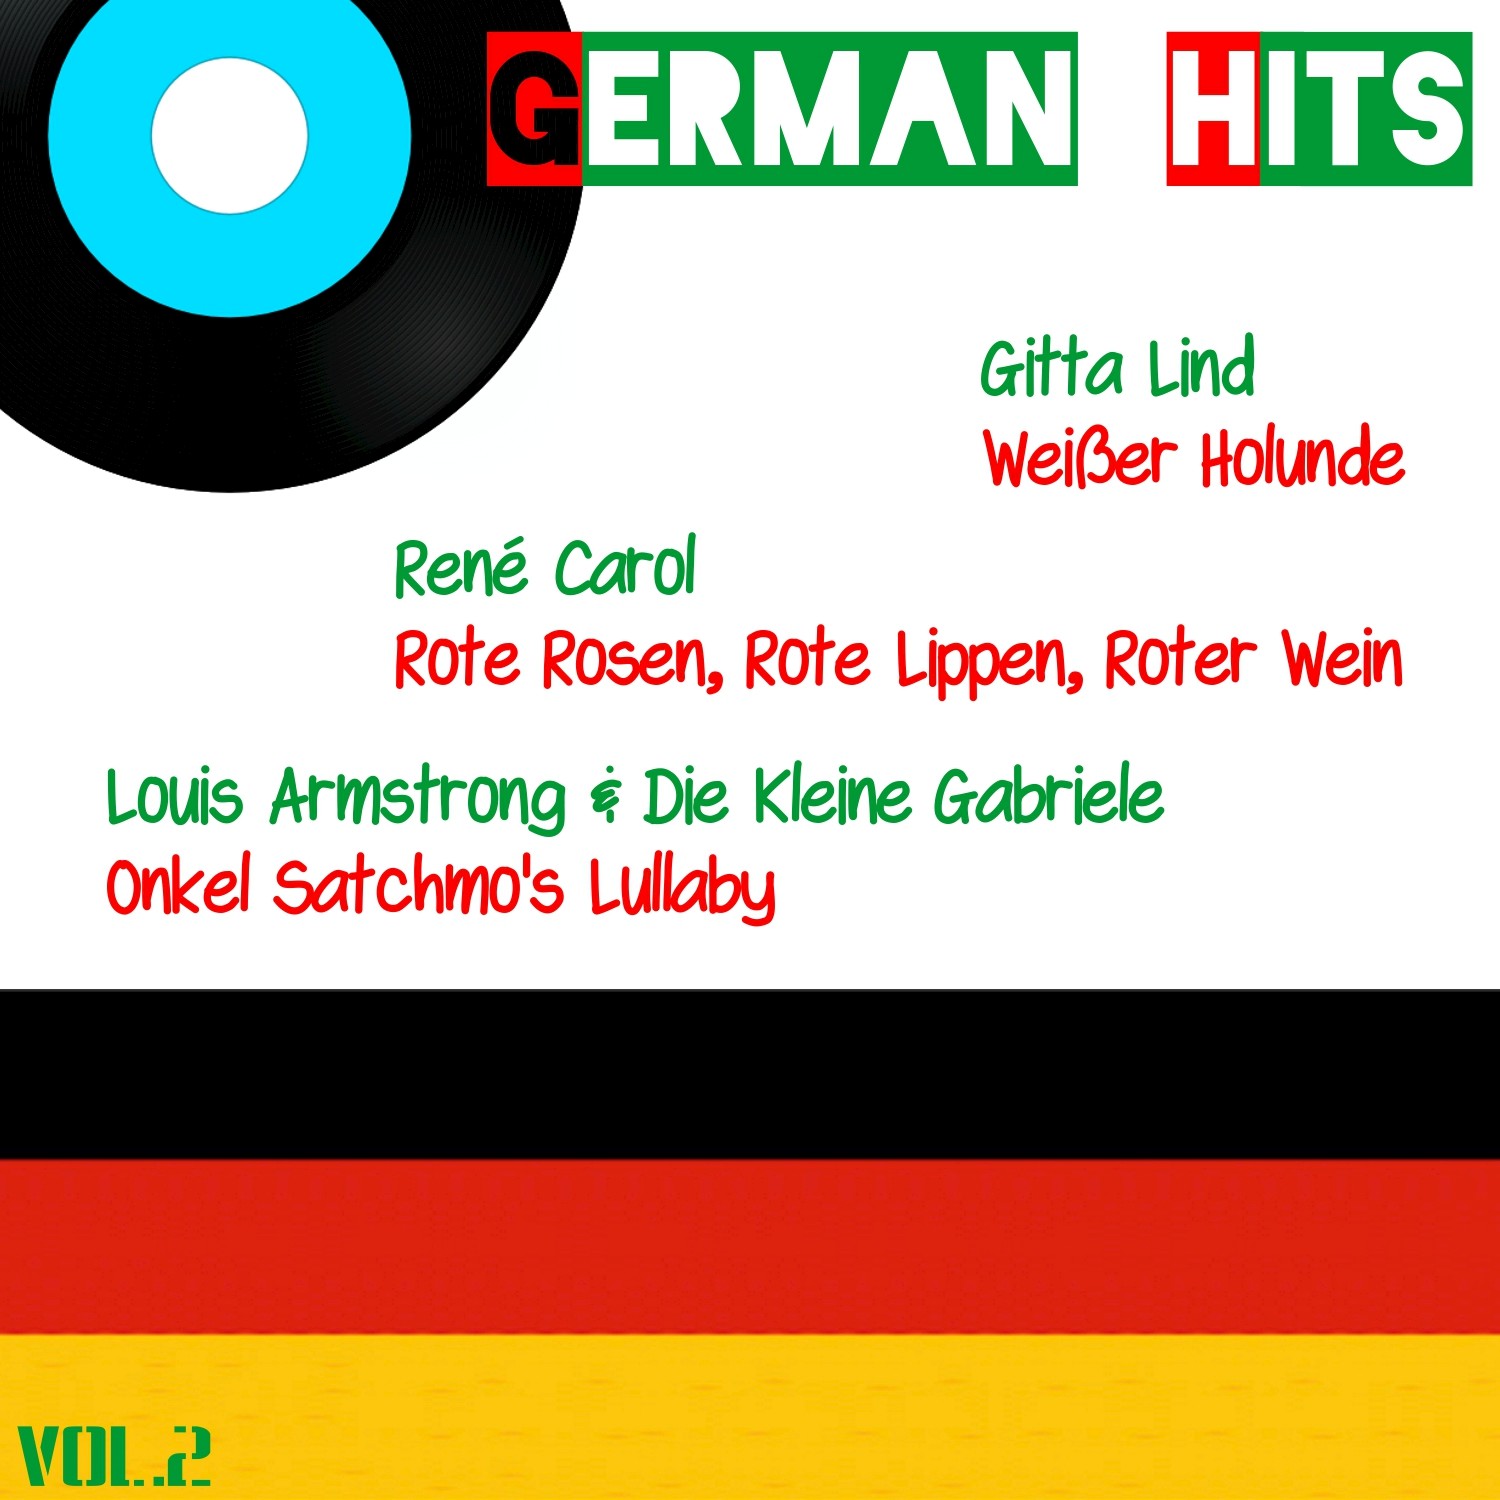 German Hits, Vol.2